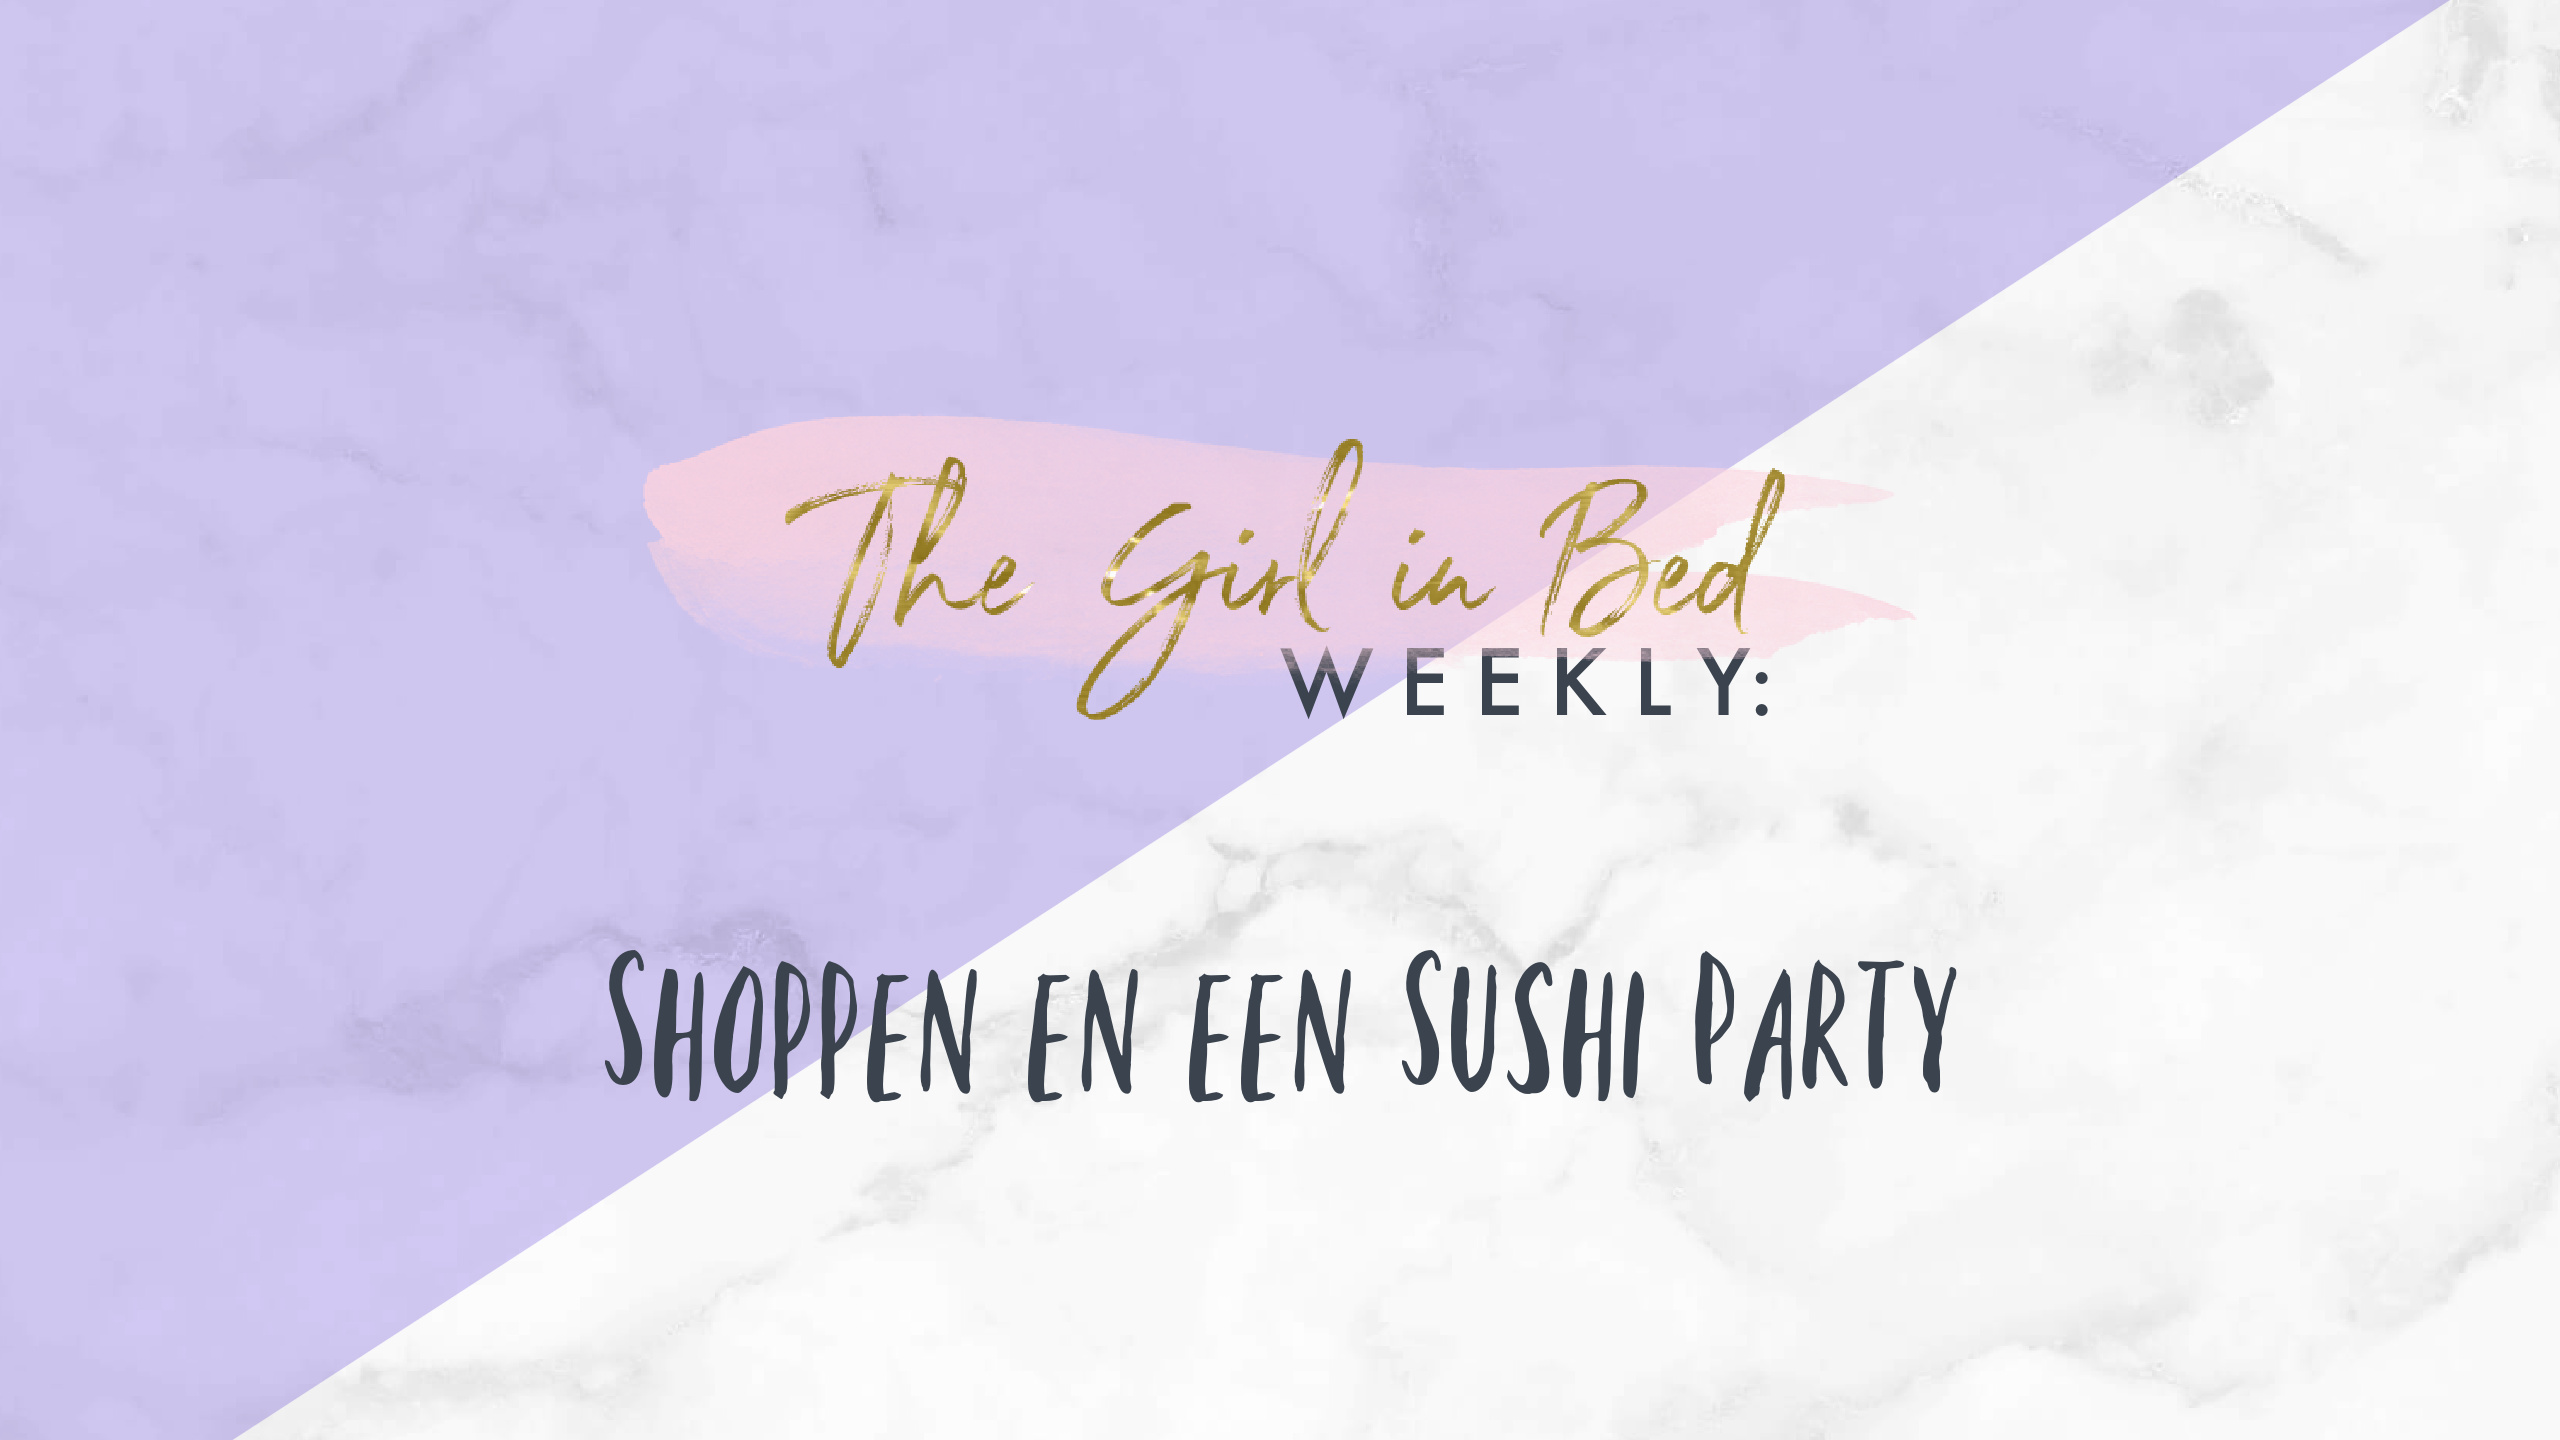 TGIB WEEKLY: Shoppen en een Sushi Party